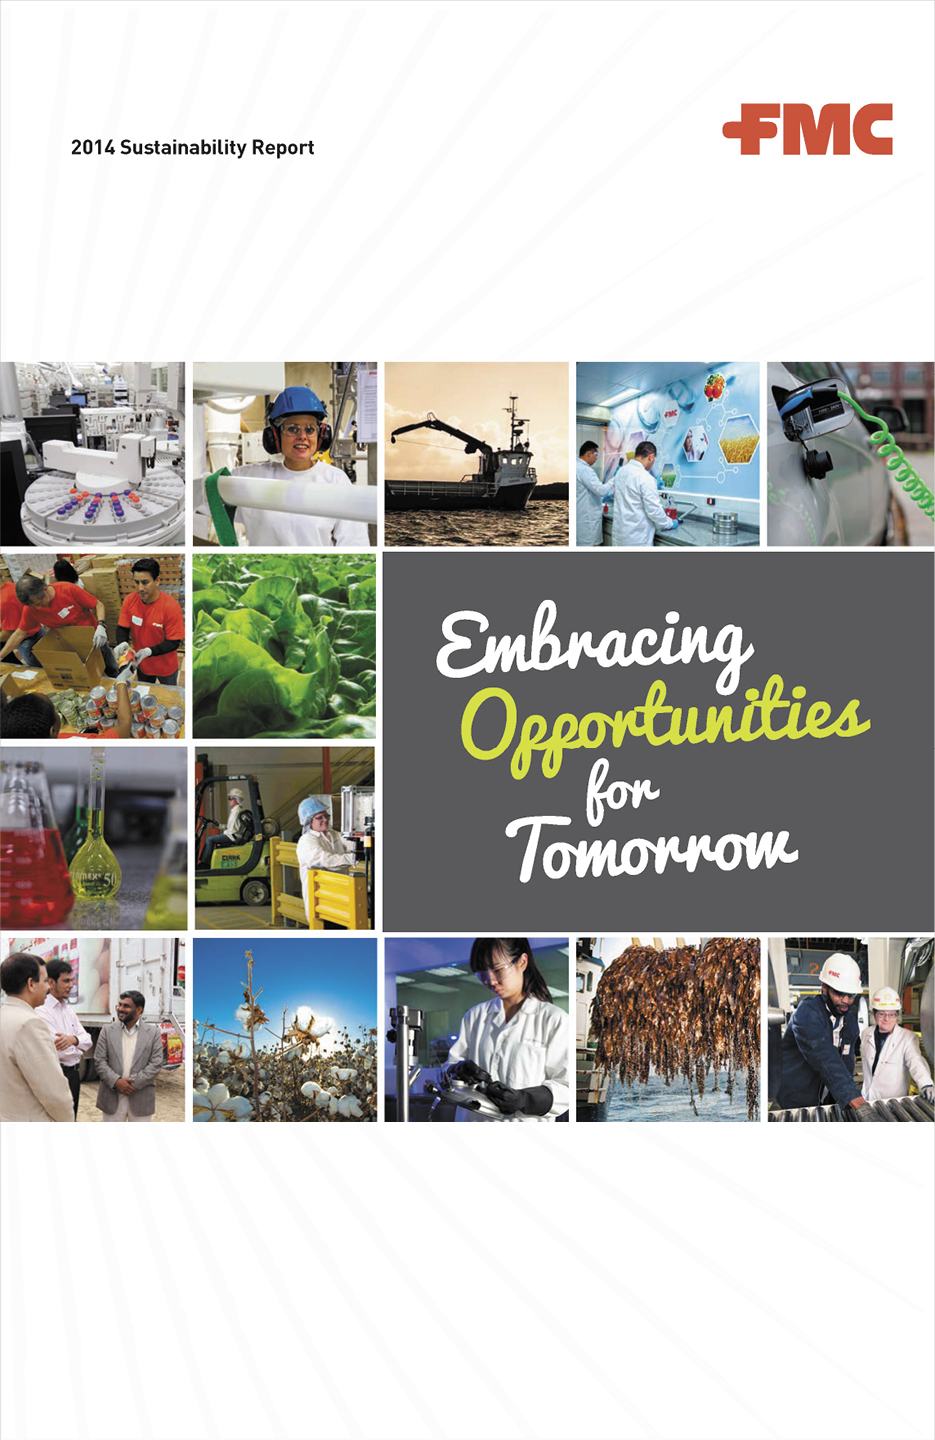 2014 FMC Sustainability Report